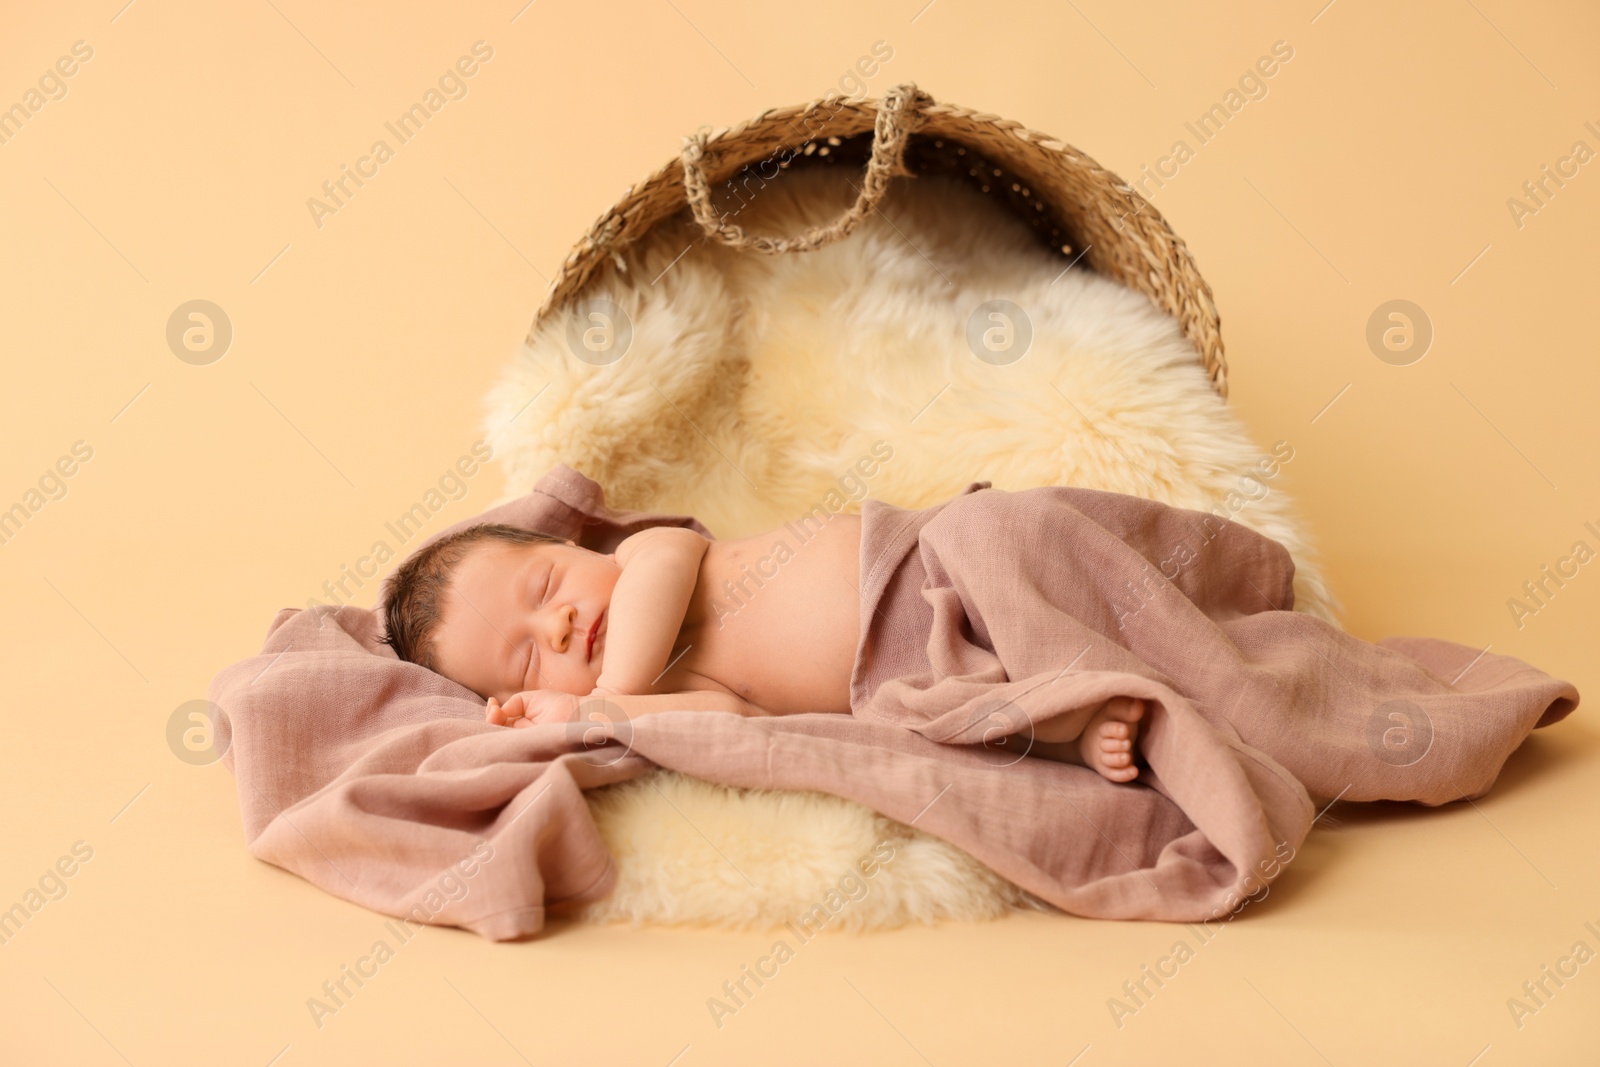 Photo of Adorable newborn baby sleeping on faux fur near overturned wicker basket against beige background